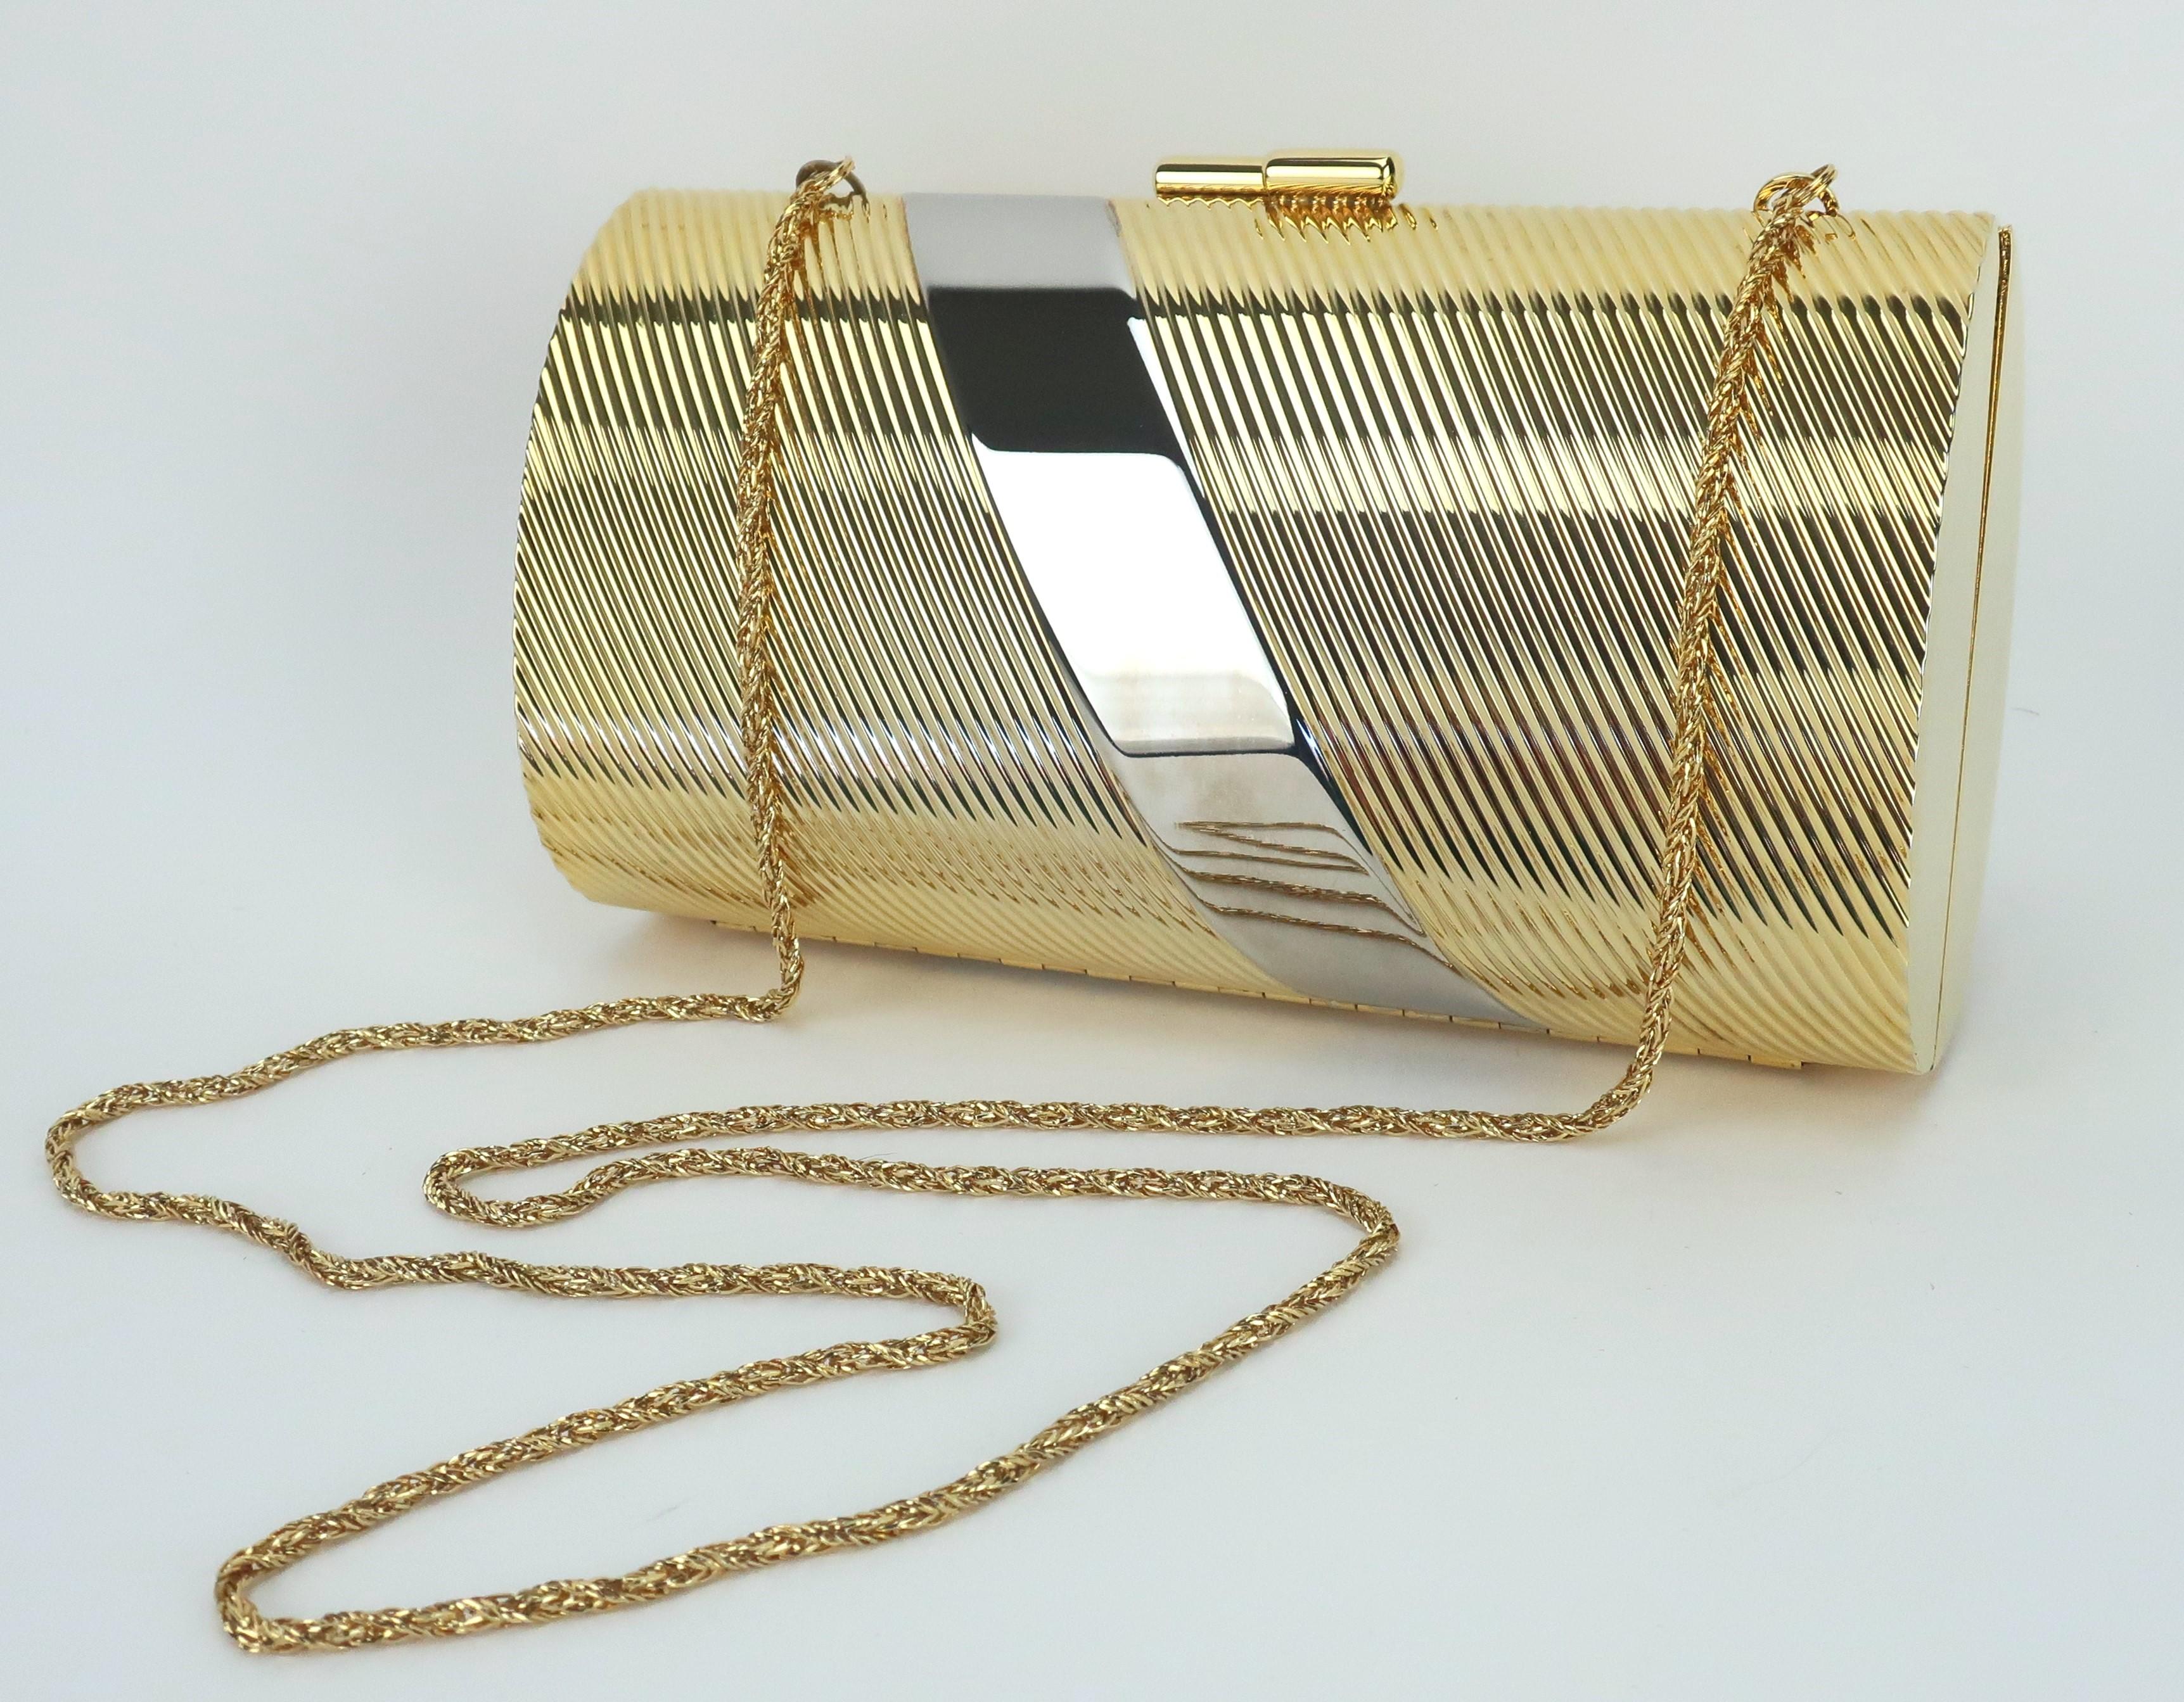 Neiman Marcus Gold & Silver Metal Clutch Handbag With Drop-In Chain, 1980's 4